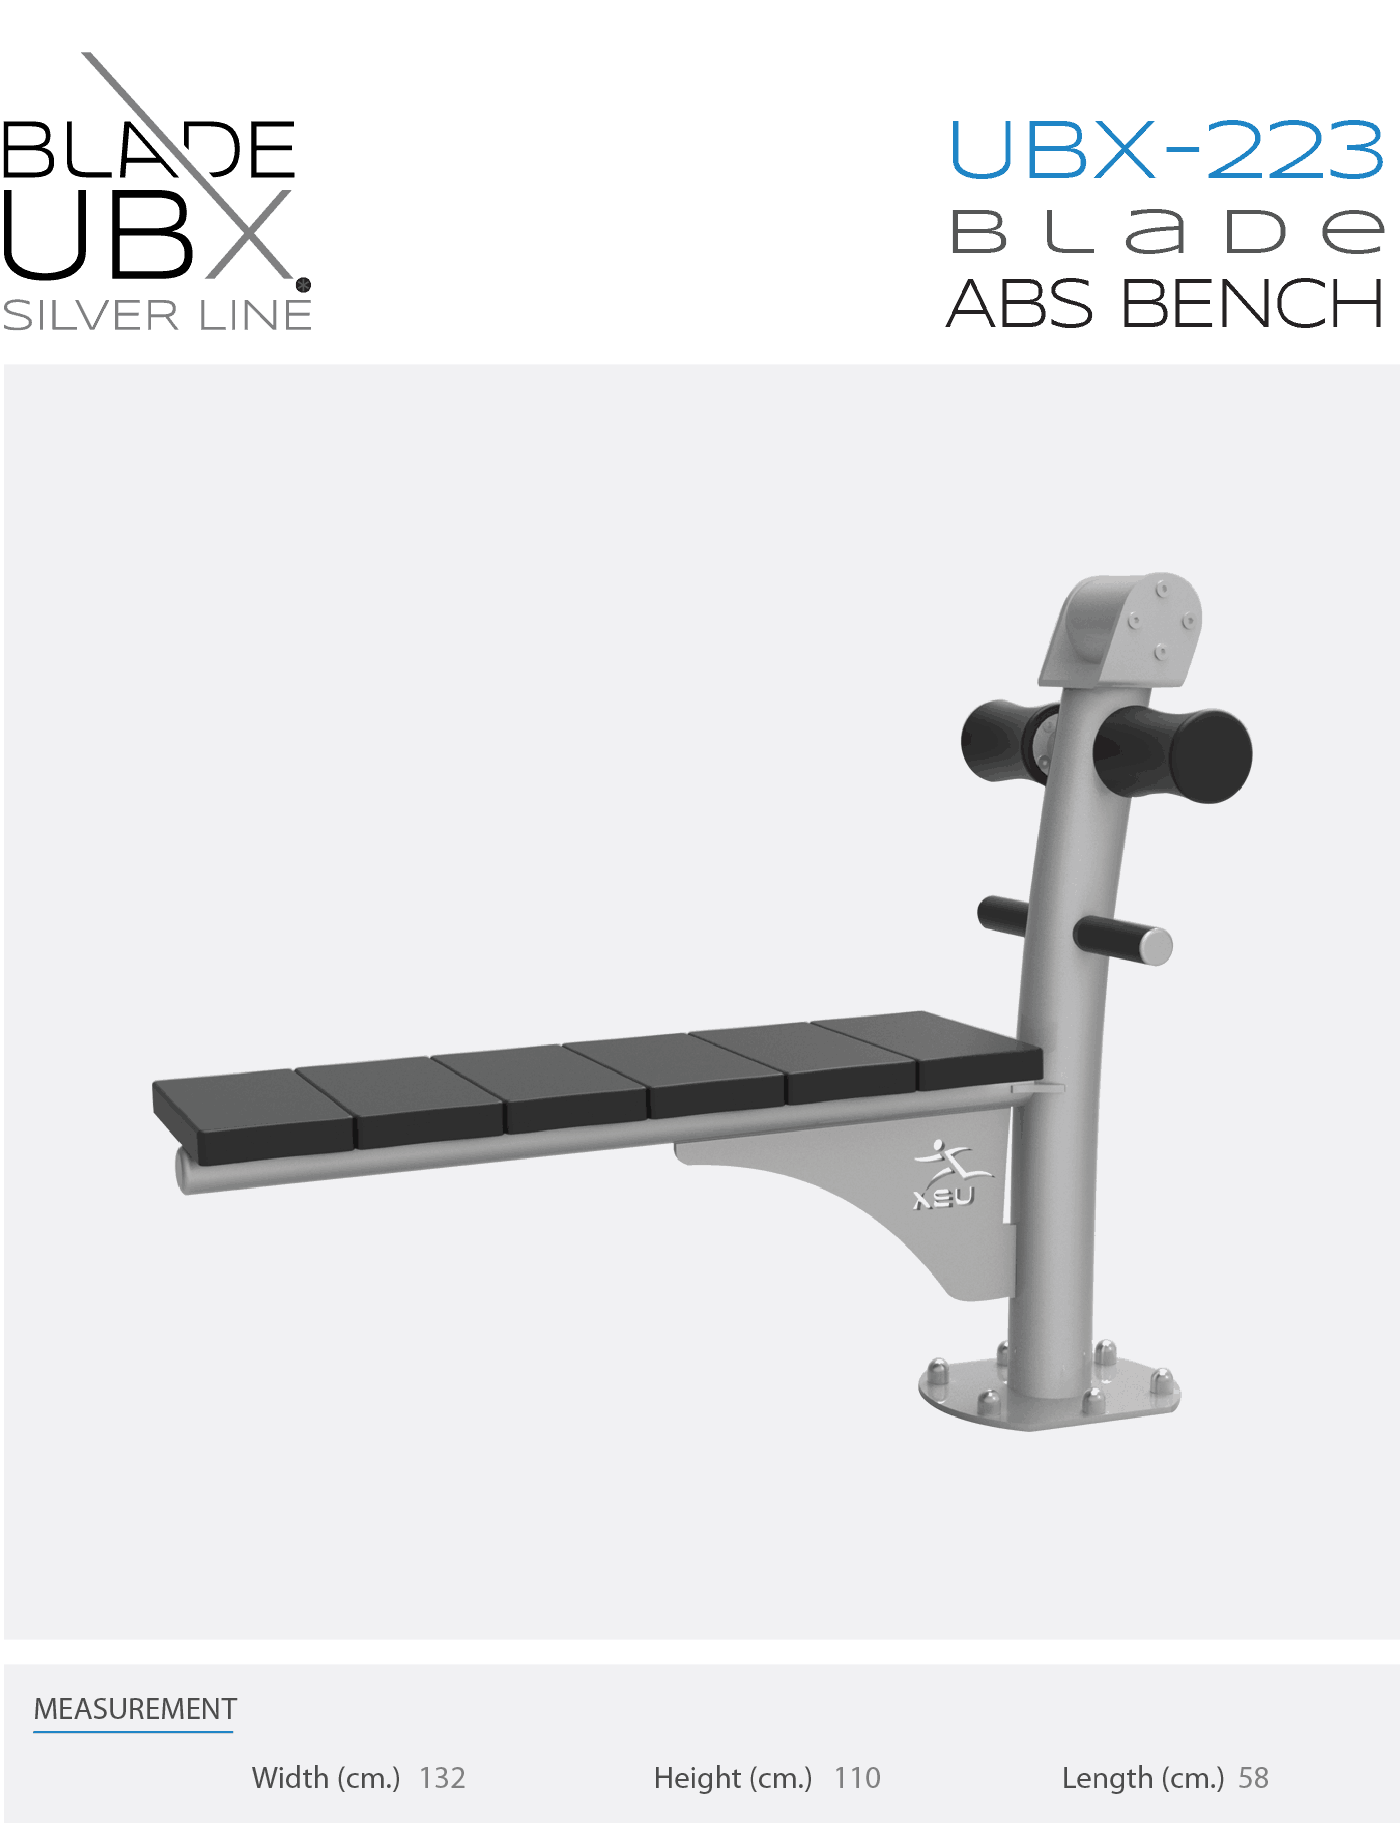 ubx-223 blade abs bench -  אורבניקס - מתקן כושר - ספת עליית בטן